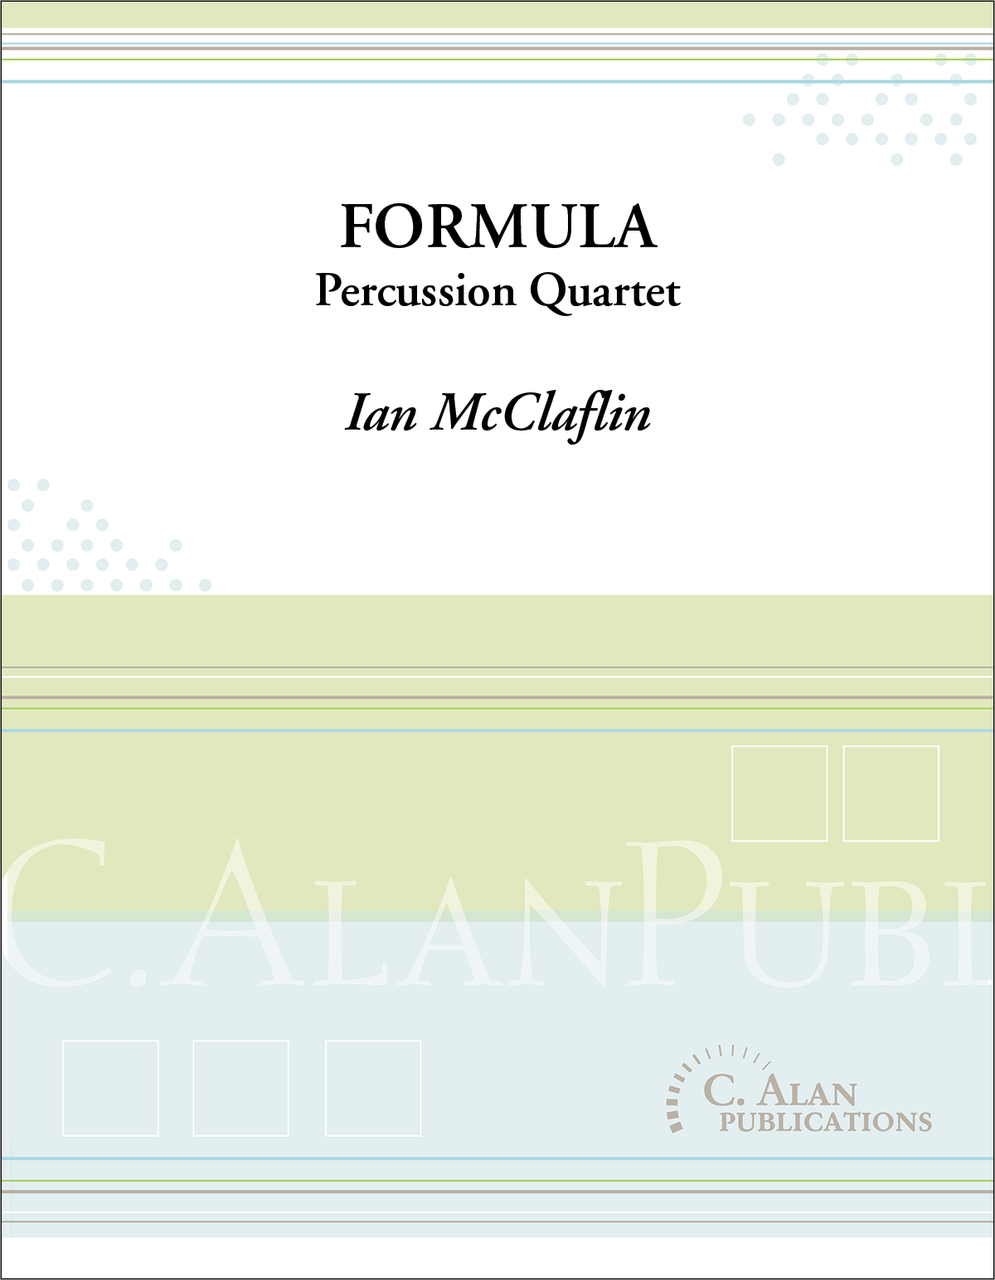 Formula by Ian McClaflin